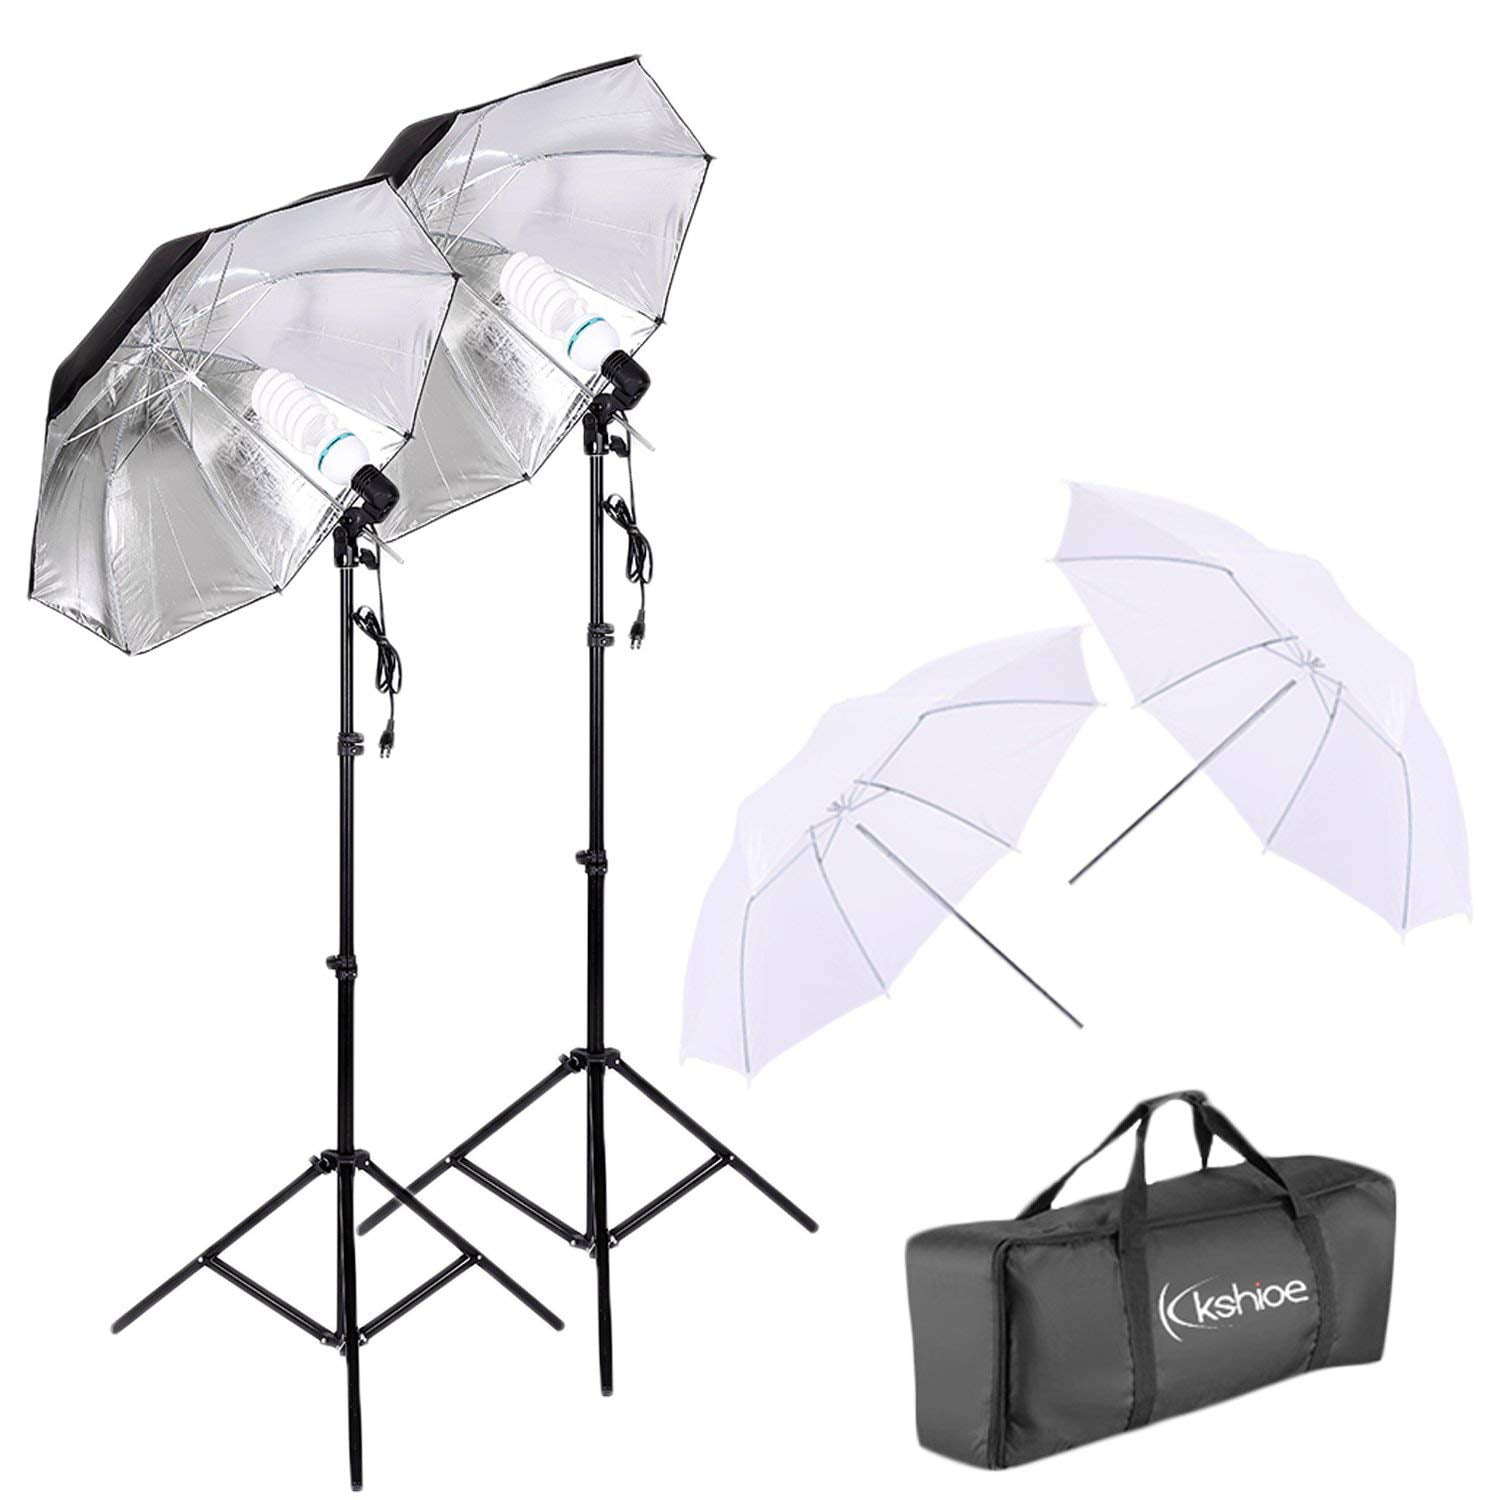 7 Feet Light Stands RPS Studio 3-Umbrella Tungsten Lighting Kit 36 White Umbrellas Includes 8 Focusing Reflectors